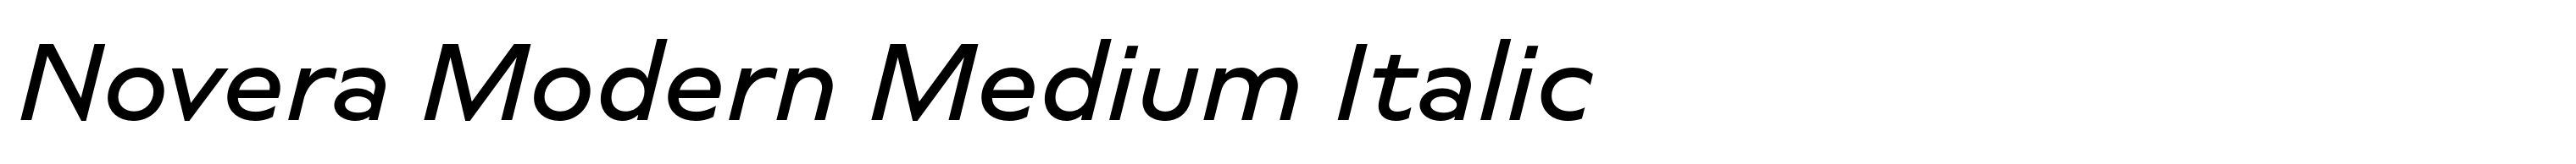 Novera Modern Medium Italic